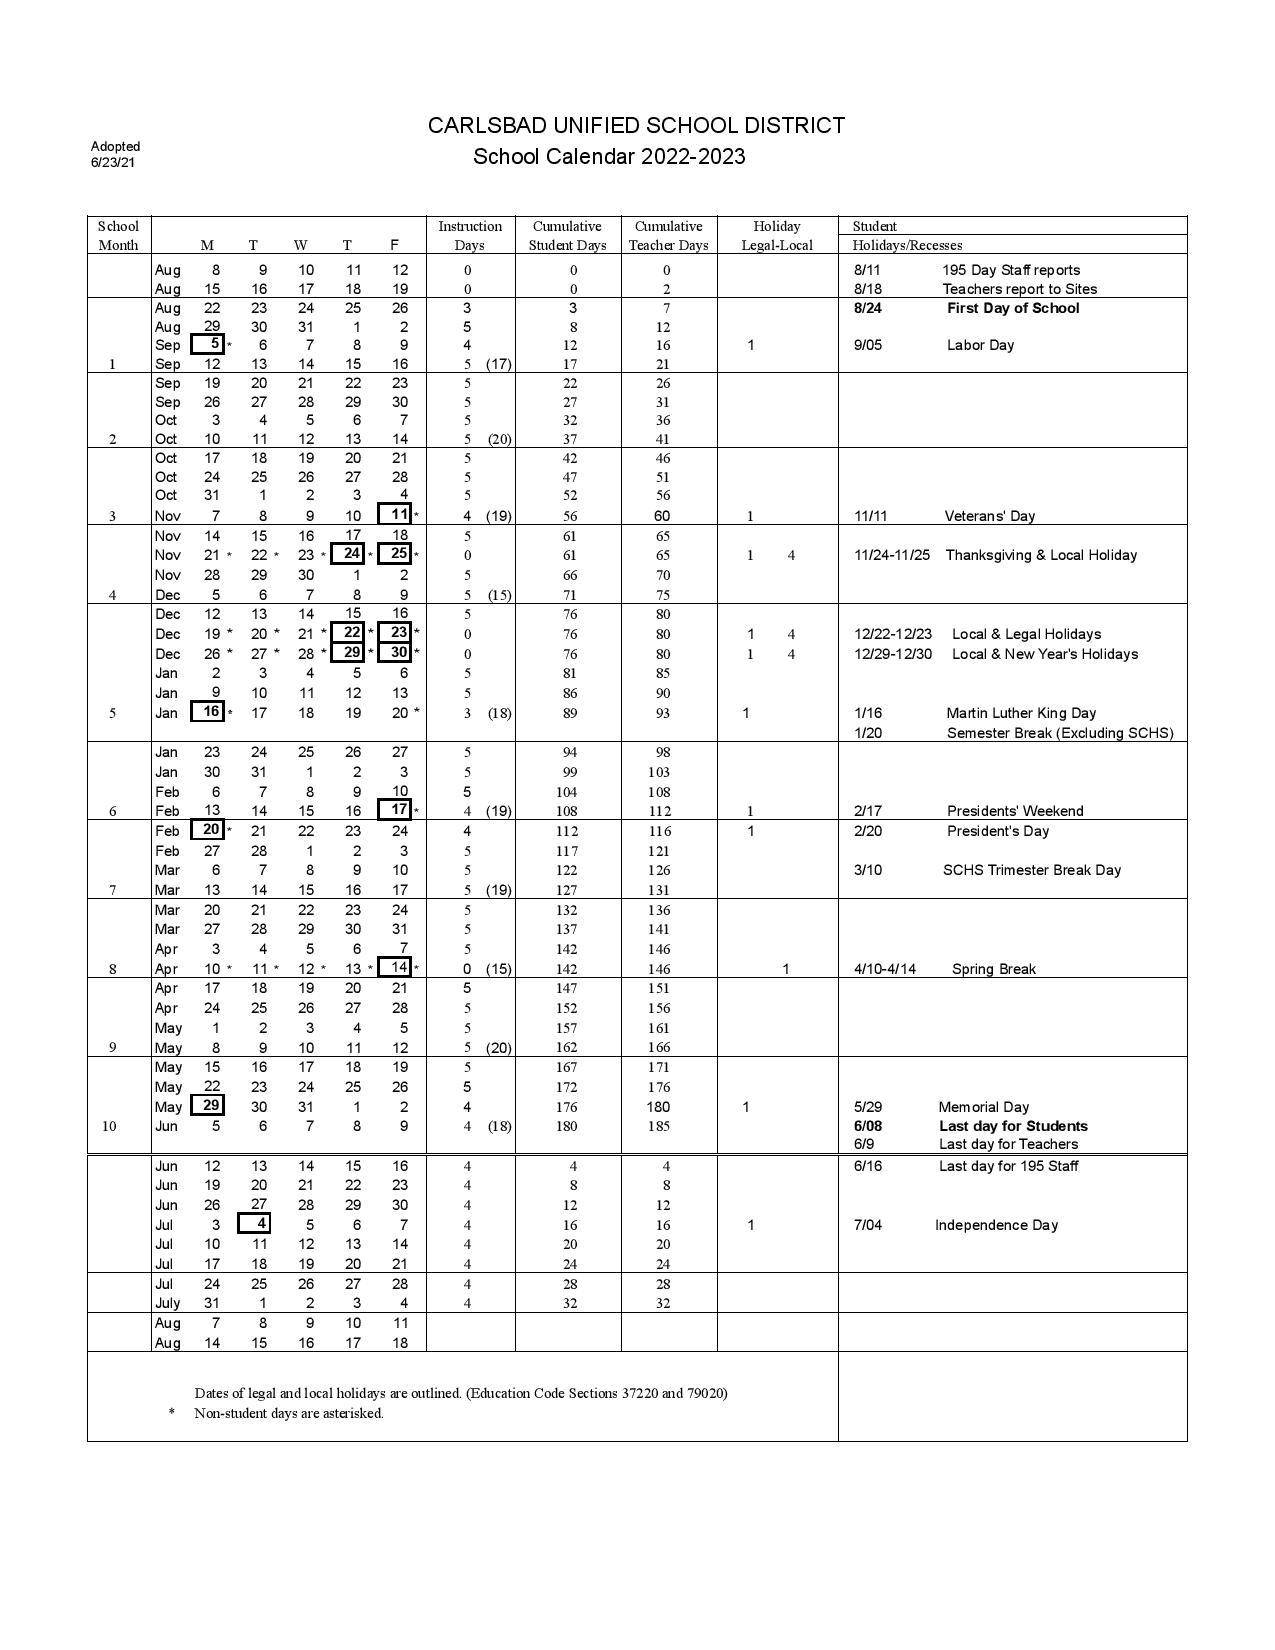 Carlsbad Unified School District Calendar 20222023